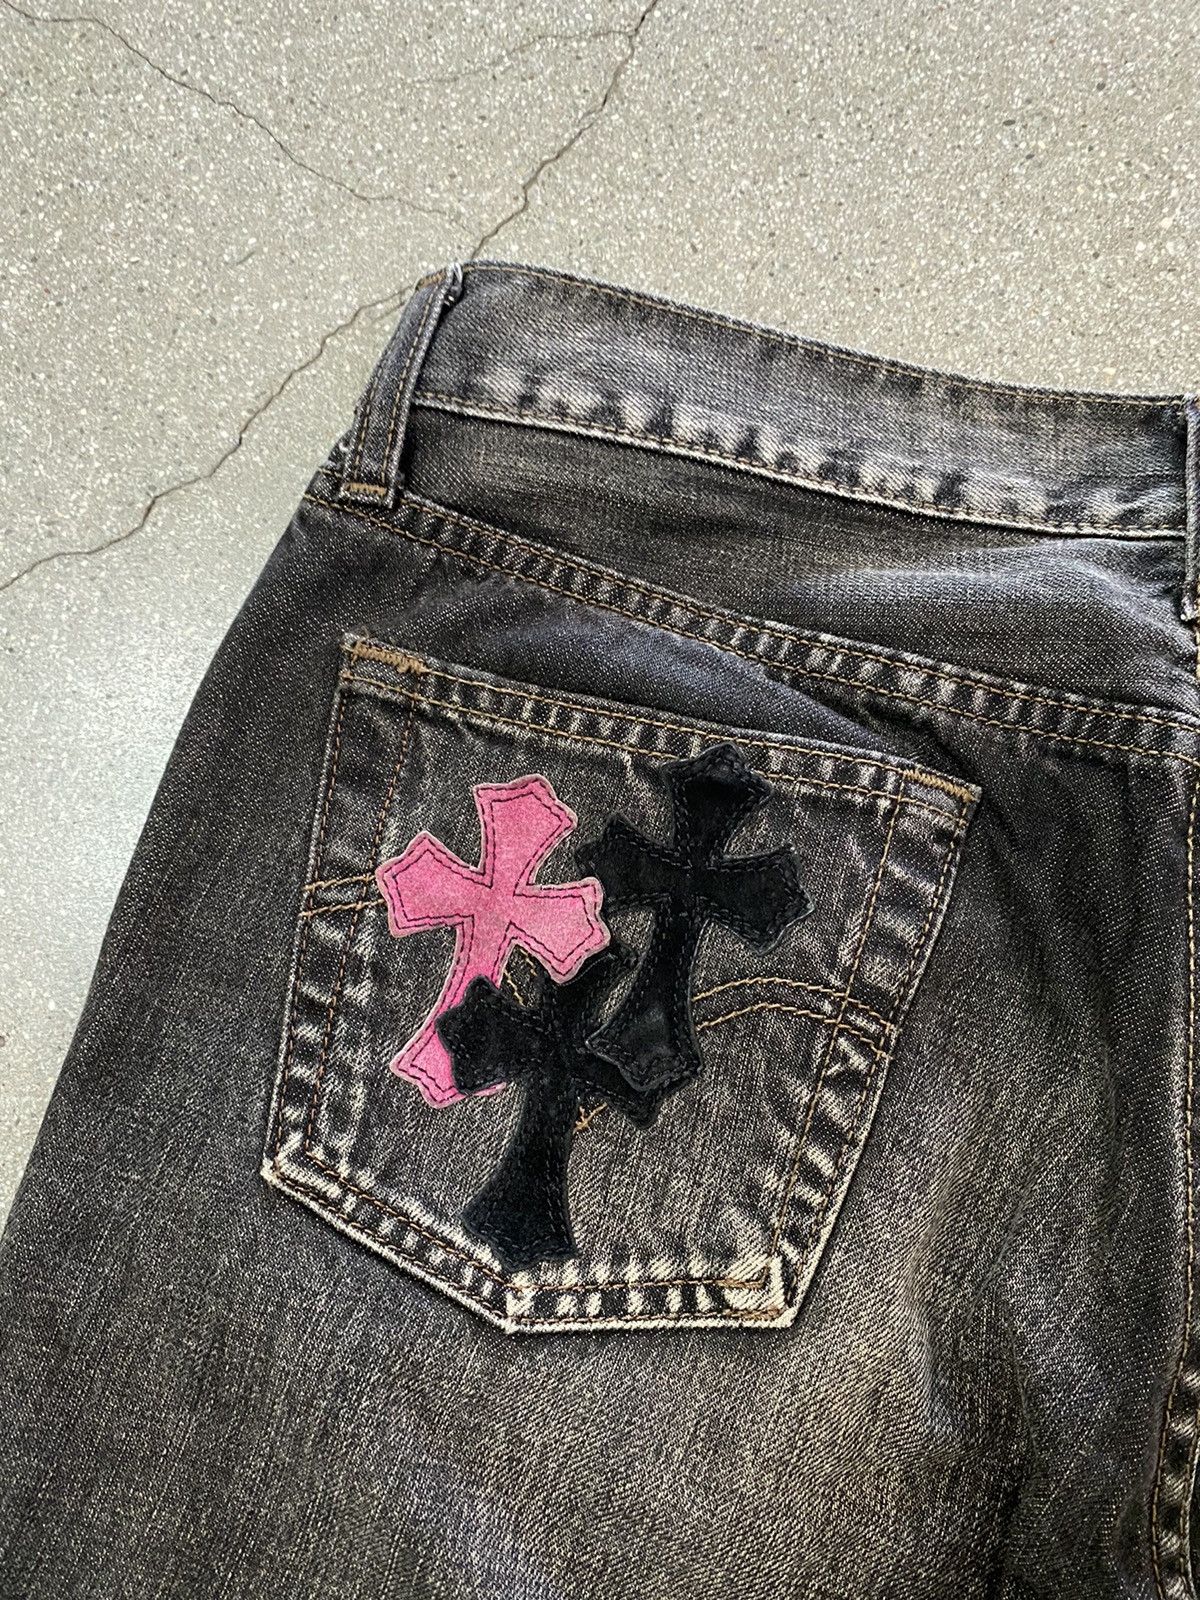 Chrome Hearts Cross Patch Denim Jeans (Special Order) Size US 30 / EU 46 - 5 Thumbnail